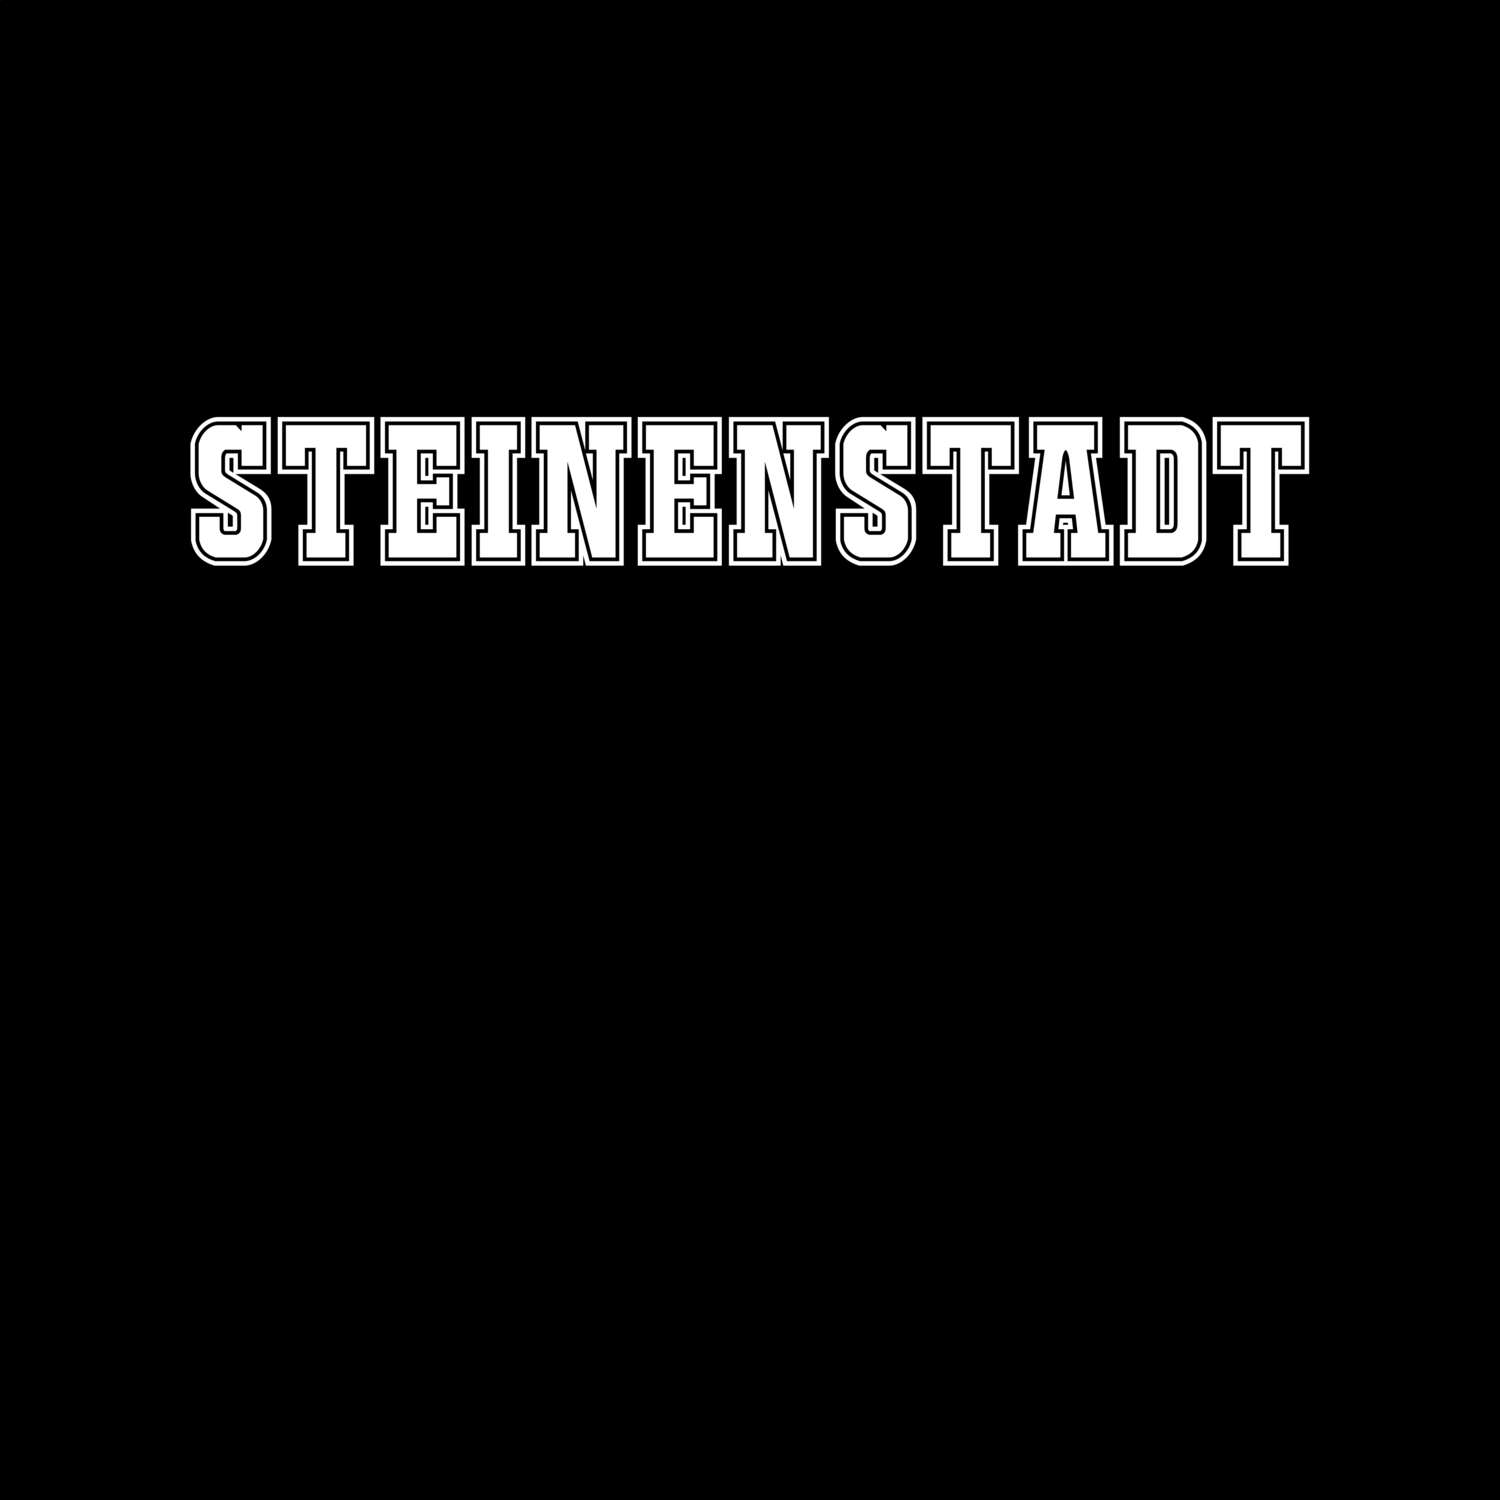 Steinenstadt T-Shirt »Classic«